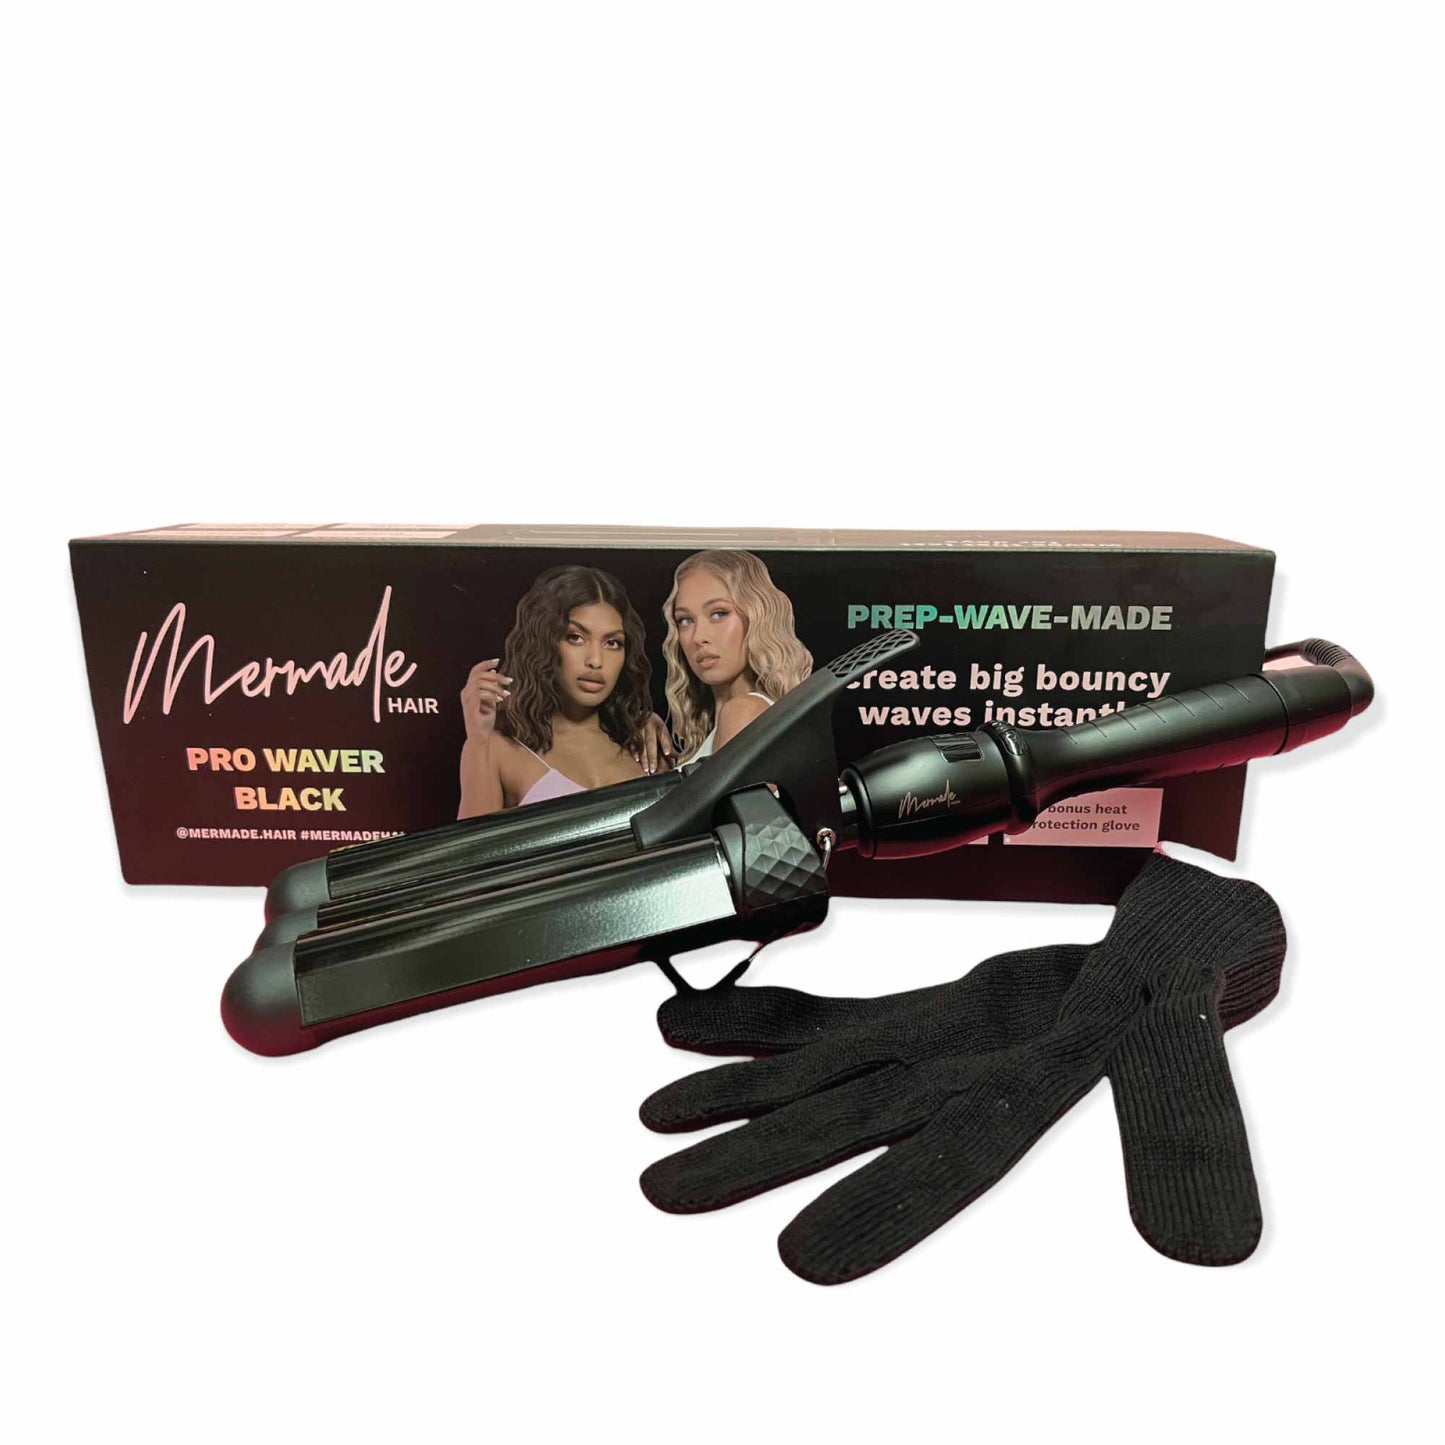 Mermade Hair Pro Waver 32mm Black 3 Barrel Styling Wand Mermaid Wave Tool